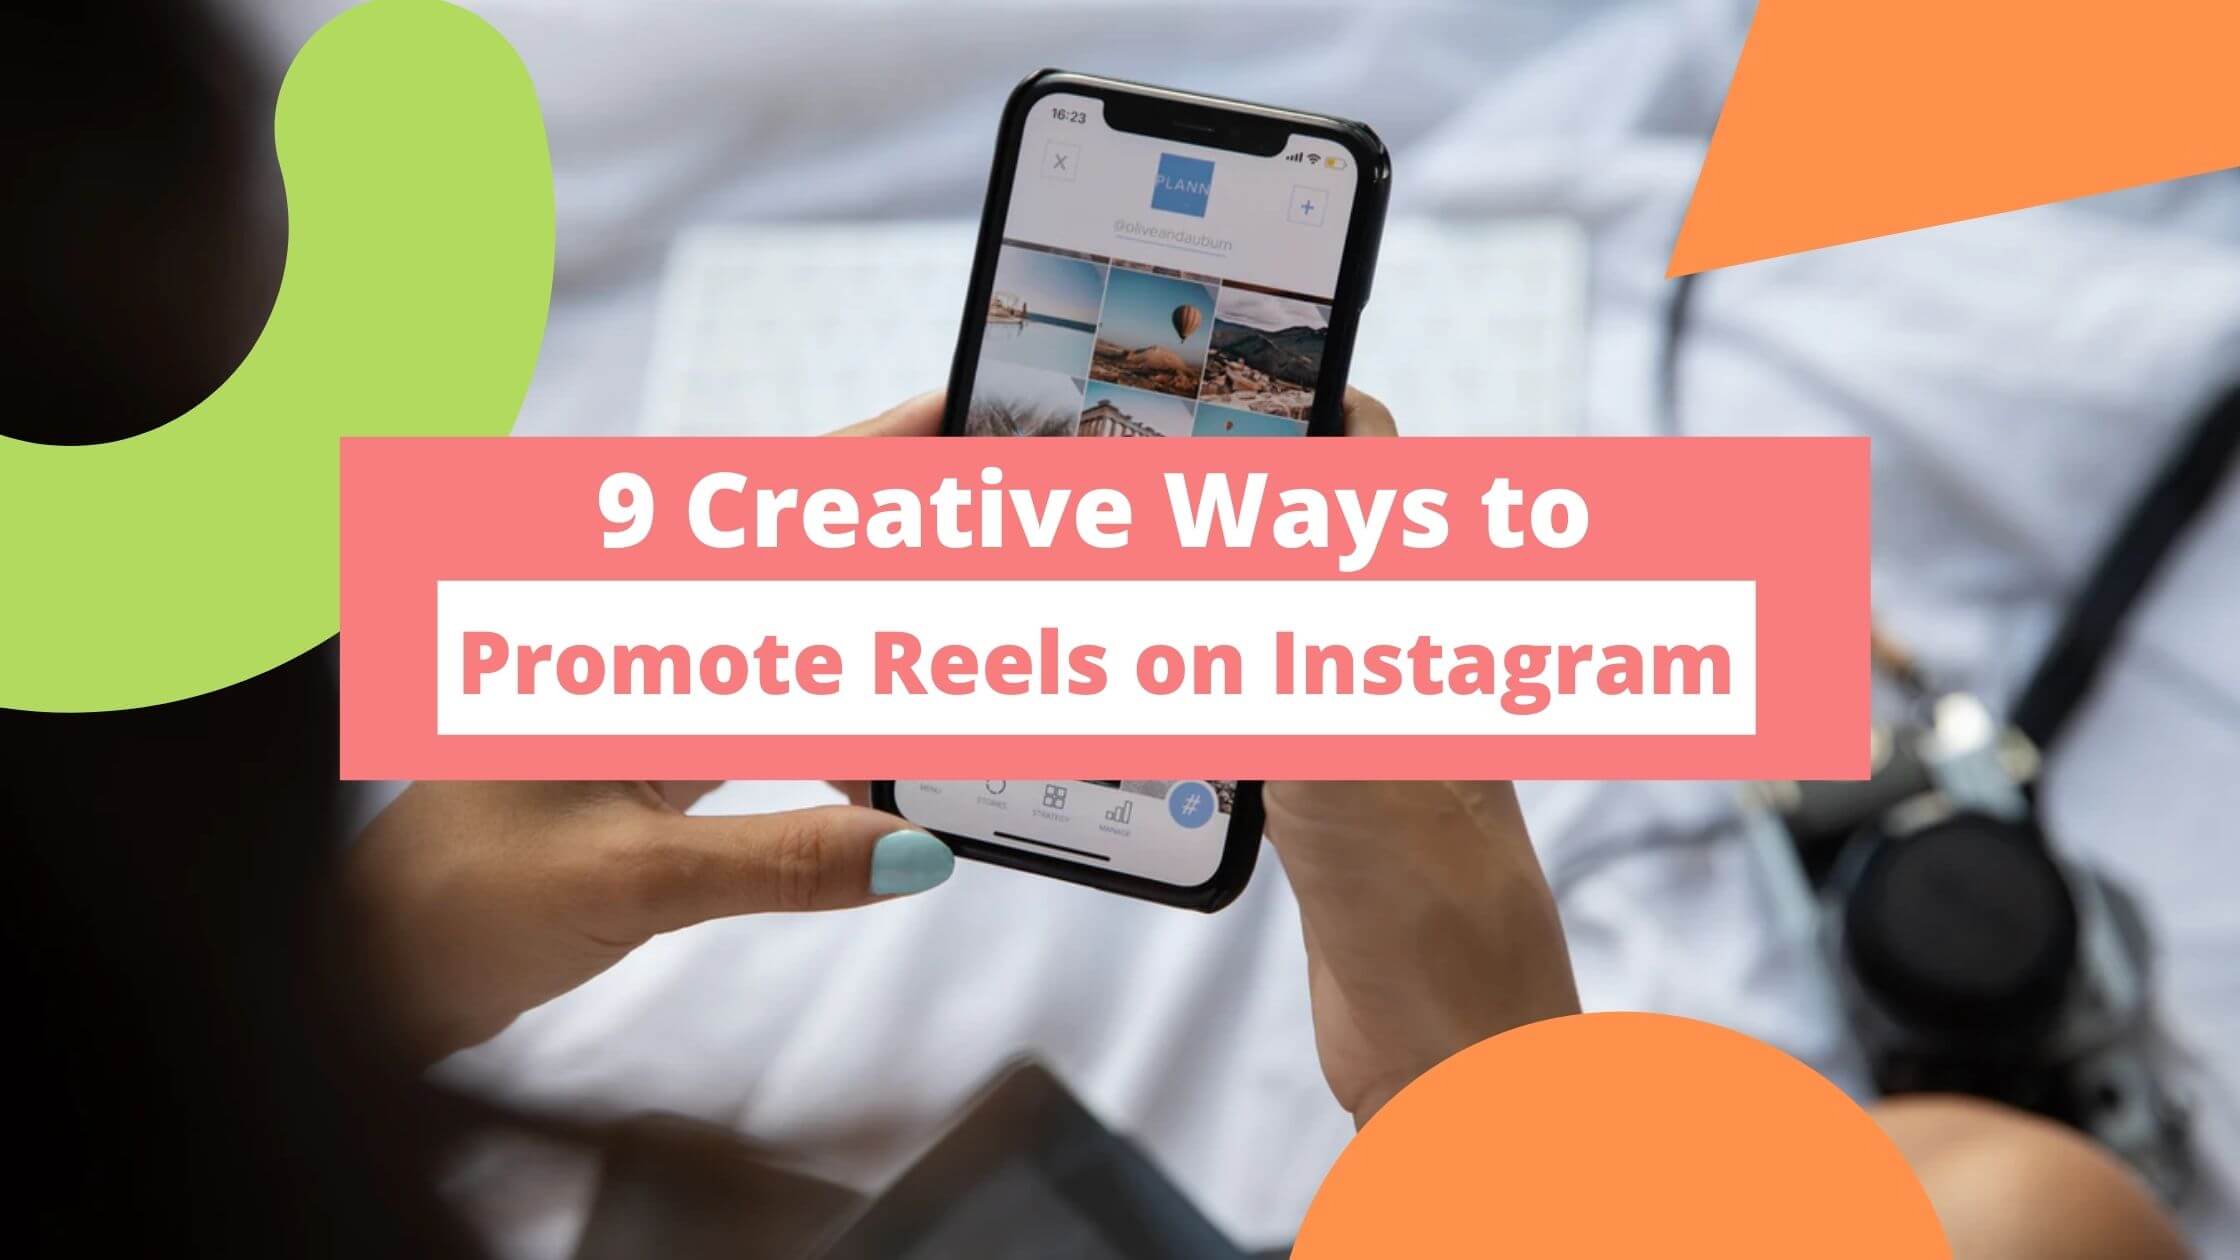 Ways to promote reels on Instagram